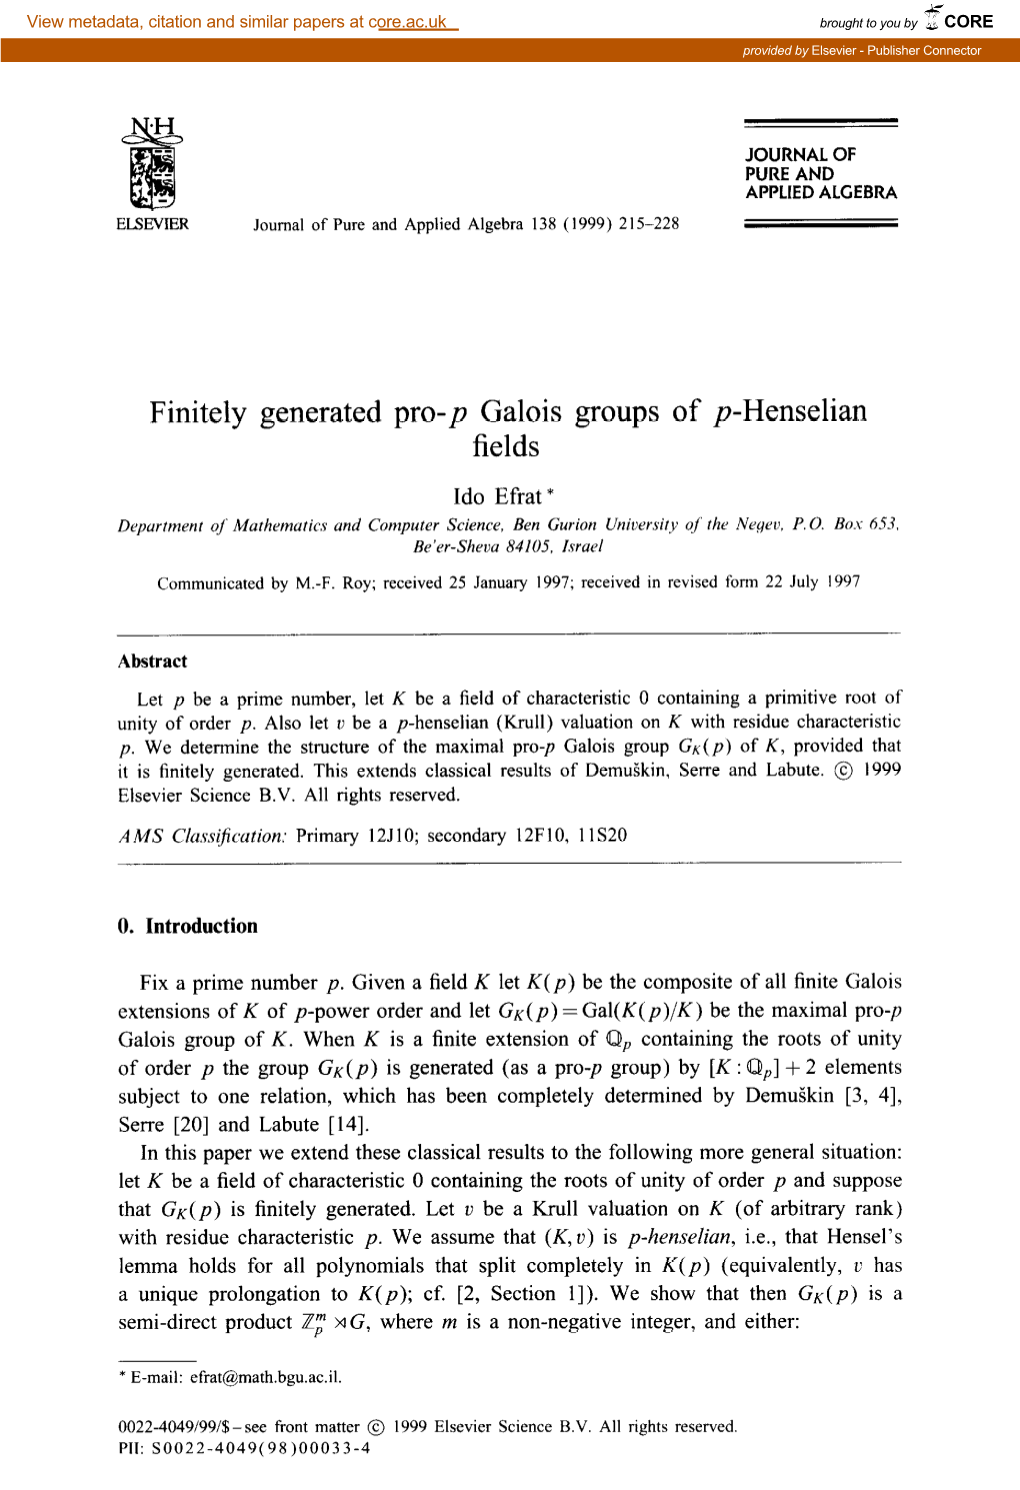 Finitely Generated Pro-P Galois Groups of P-Henselian Fields